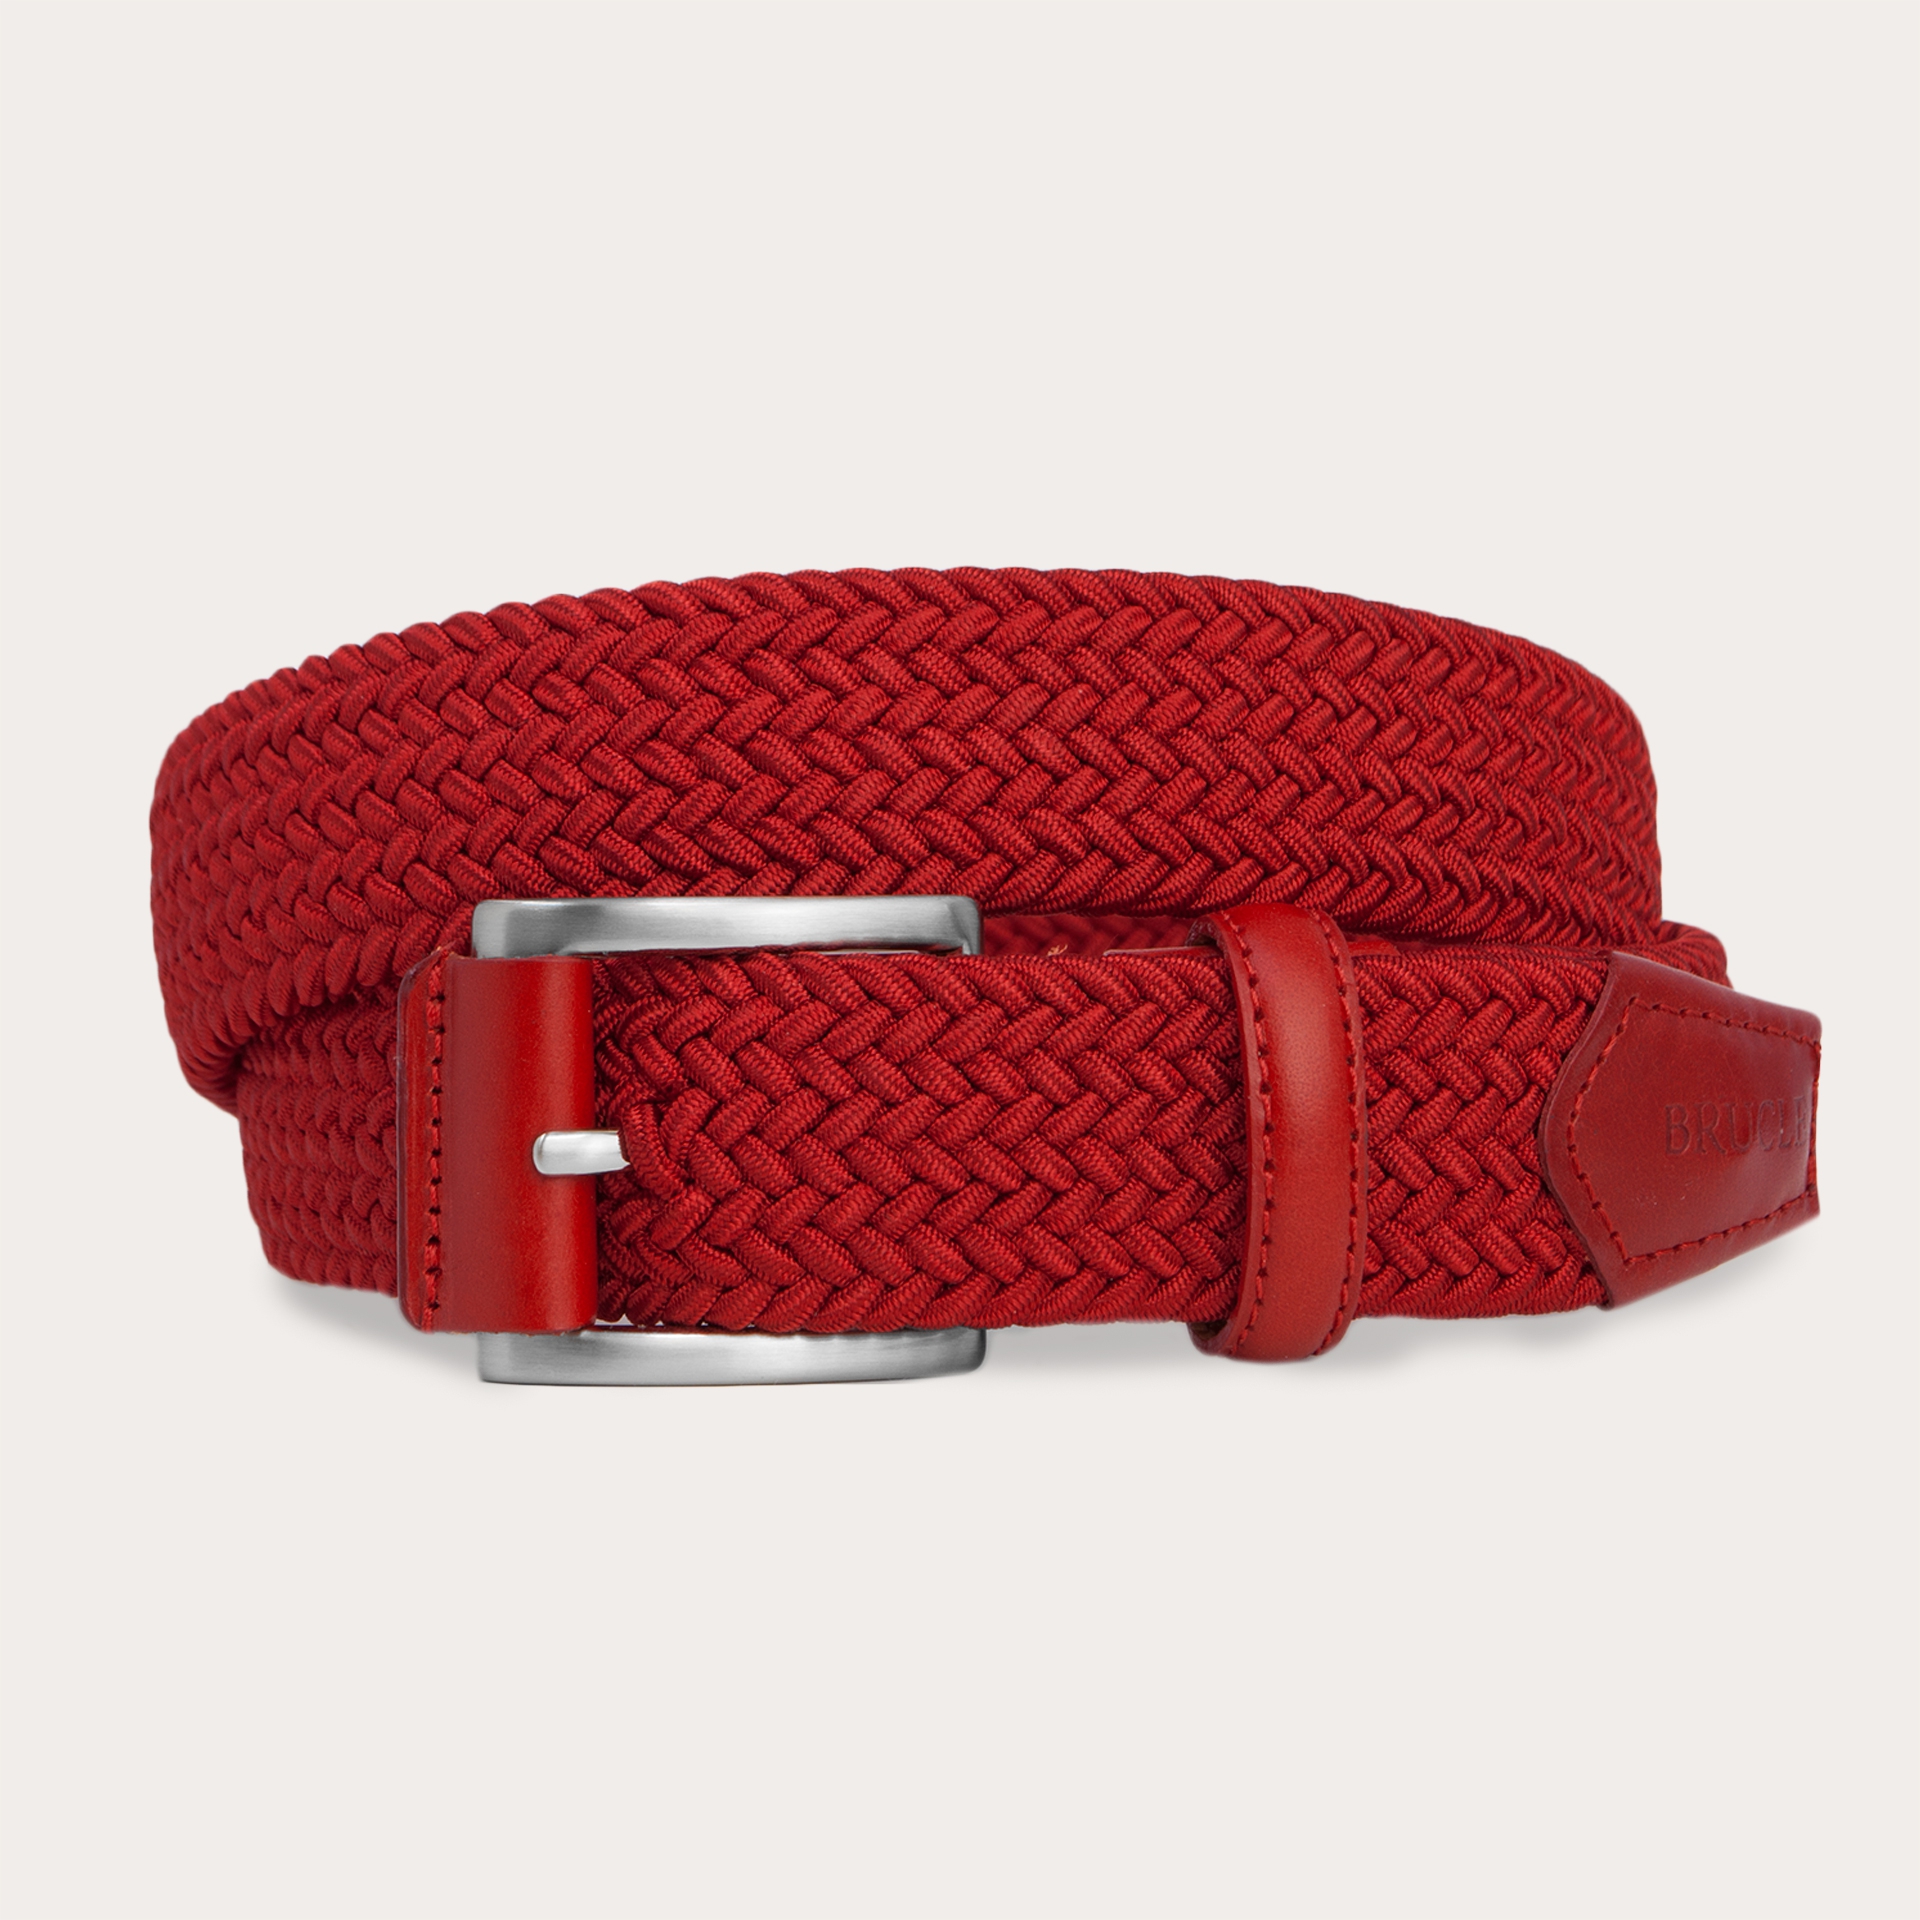 Braided elastic stretchbelt, red